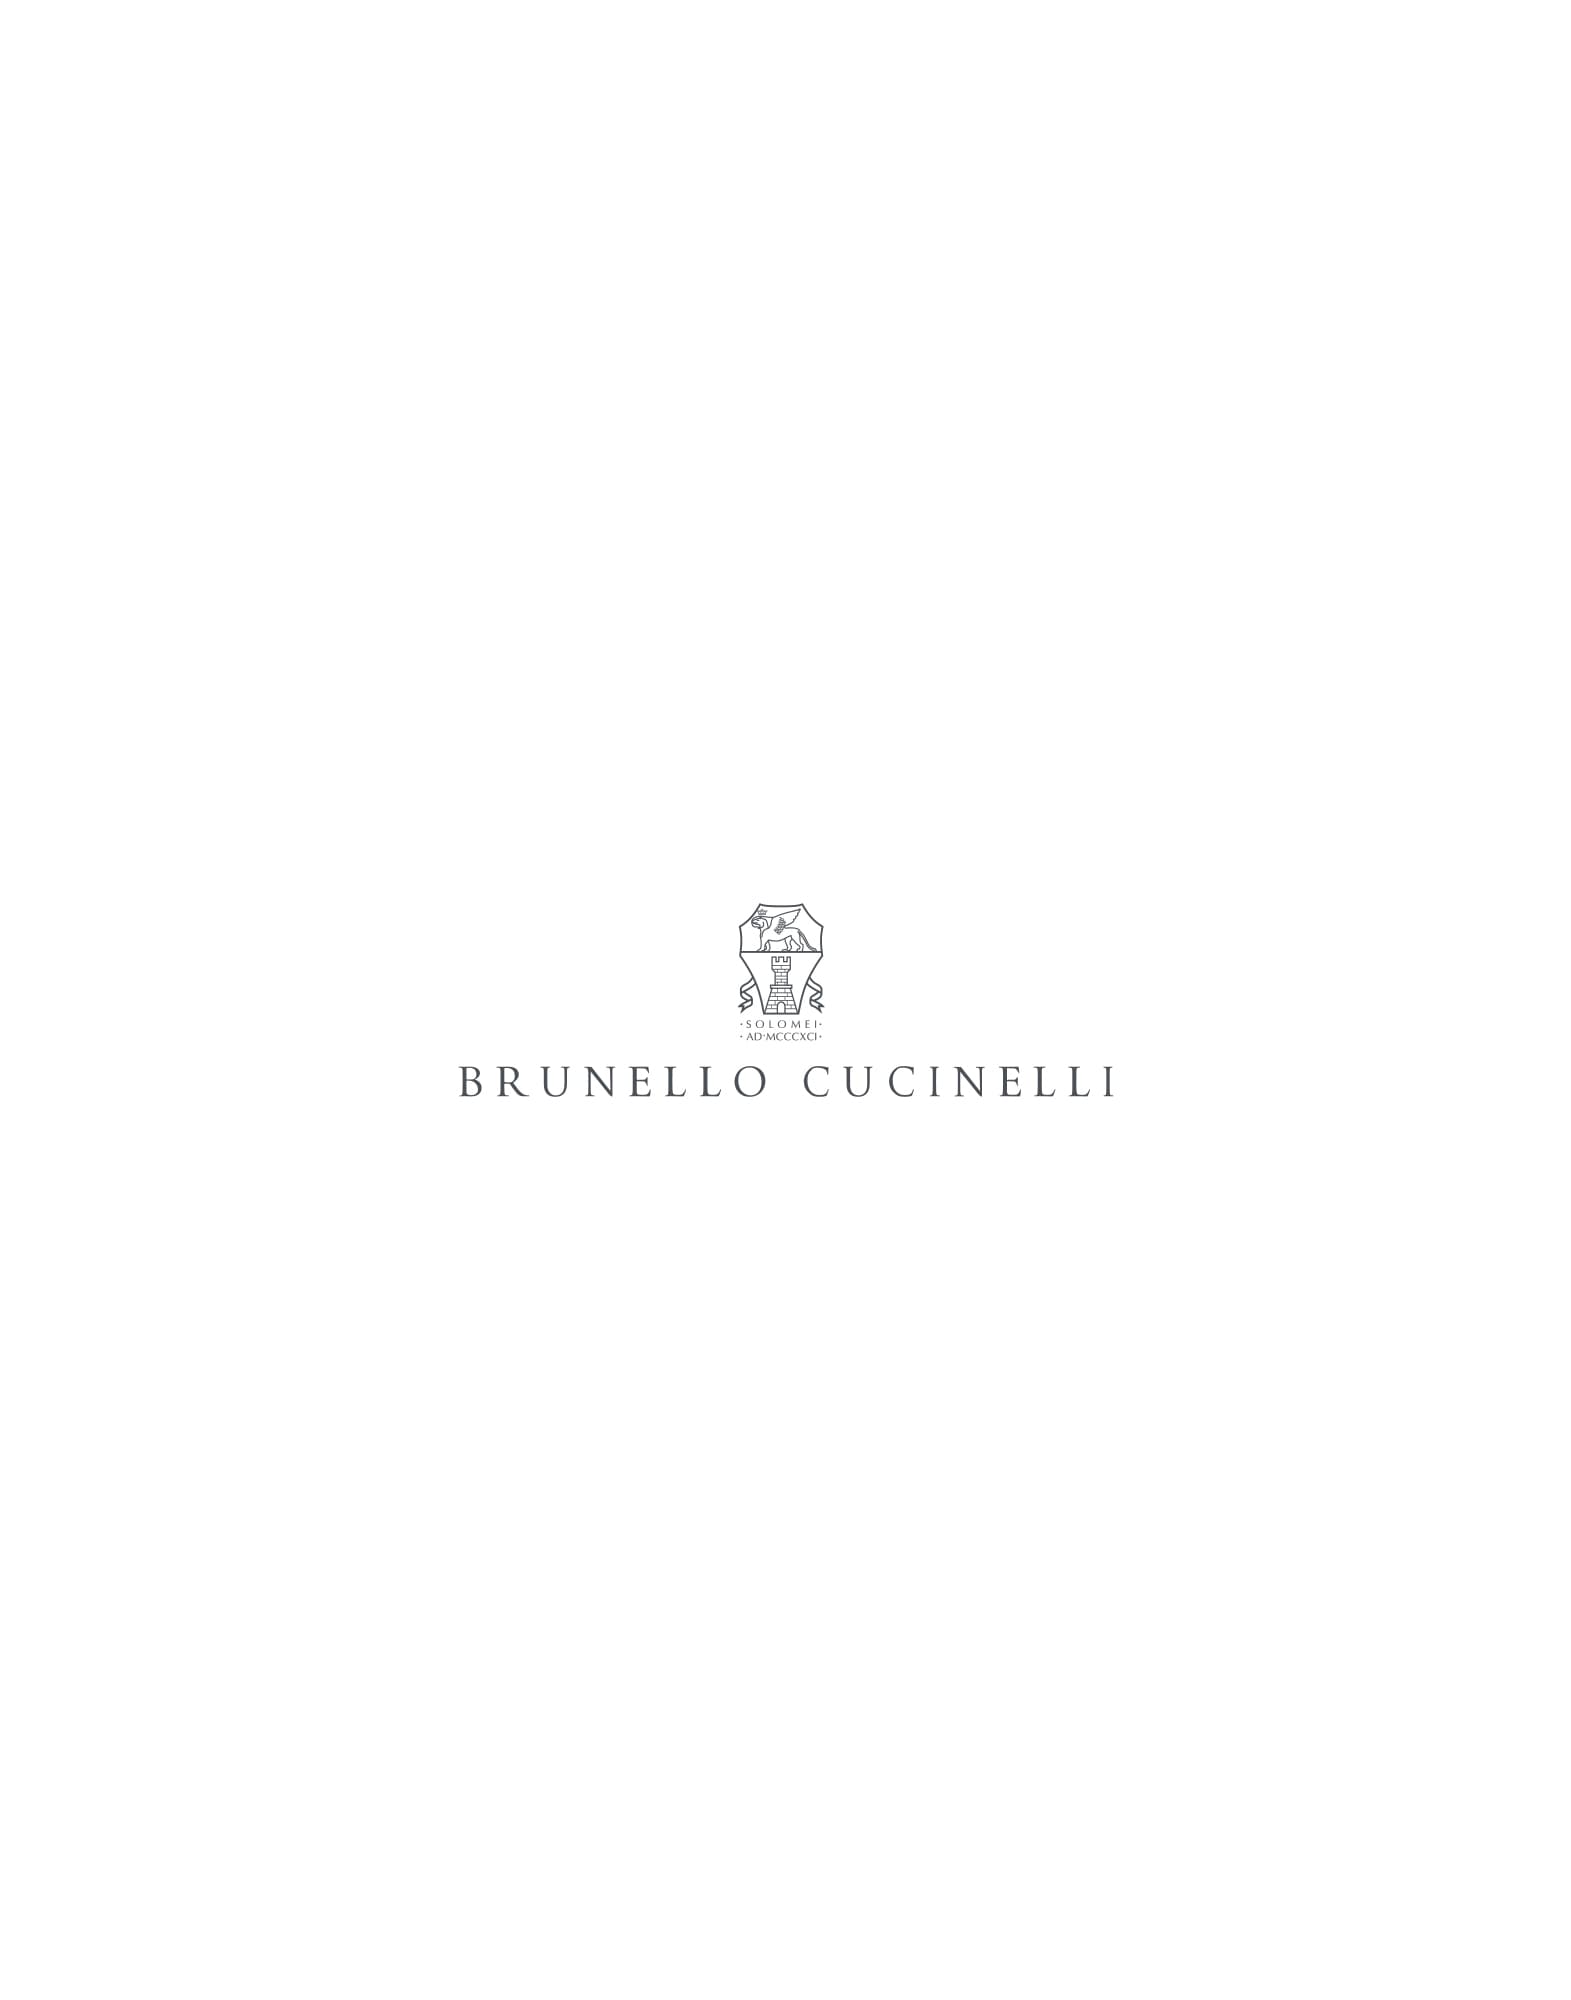 Brunello Cucinelli boutique: Warsaw